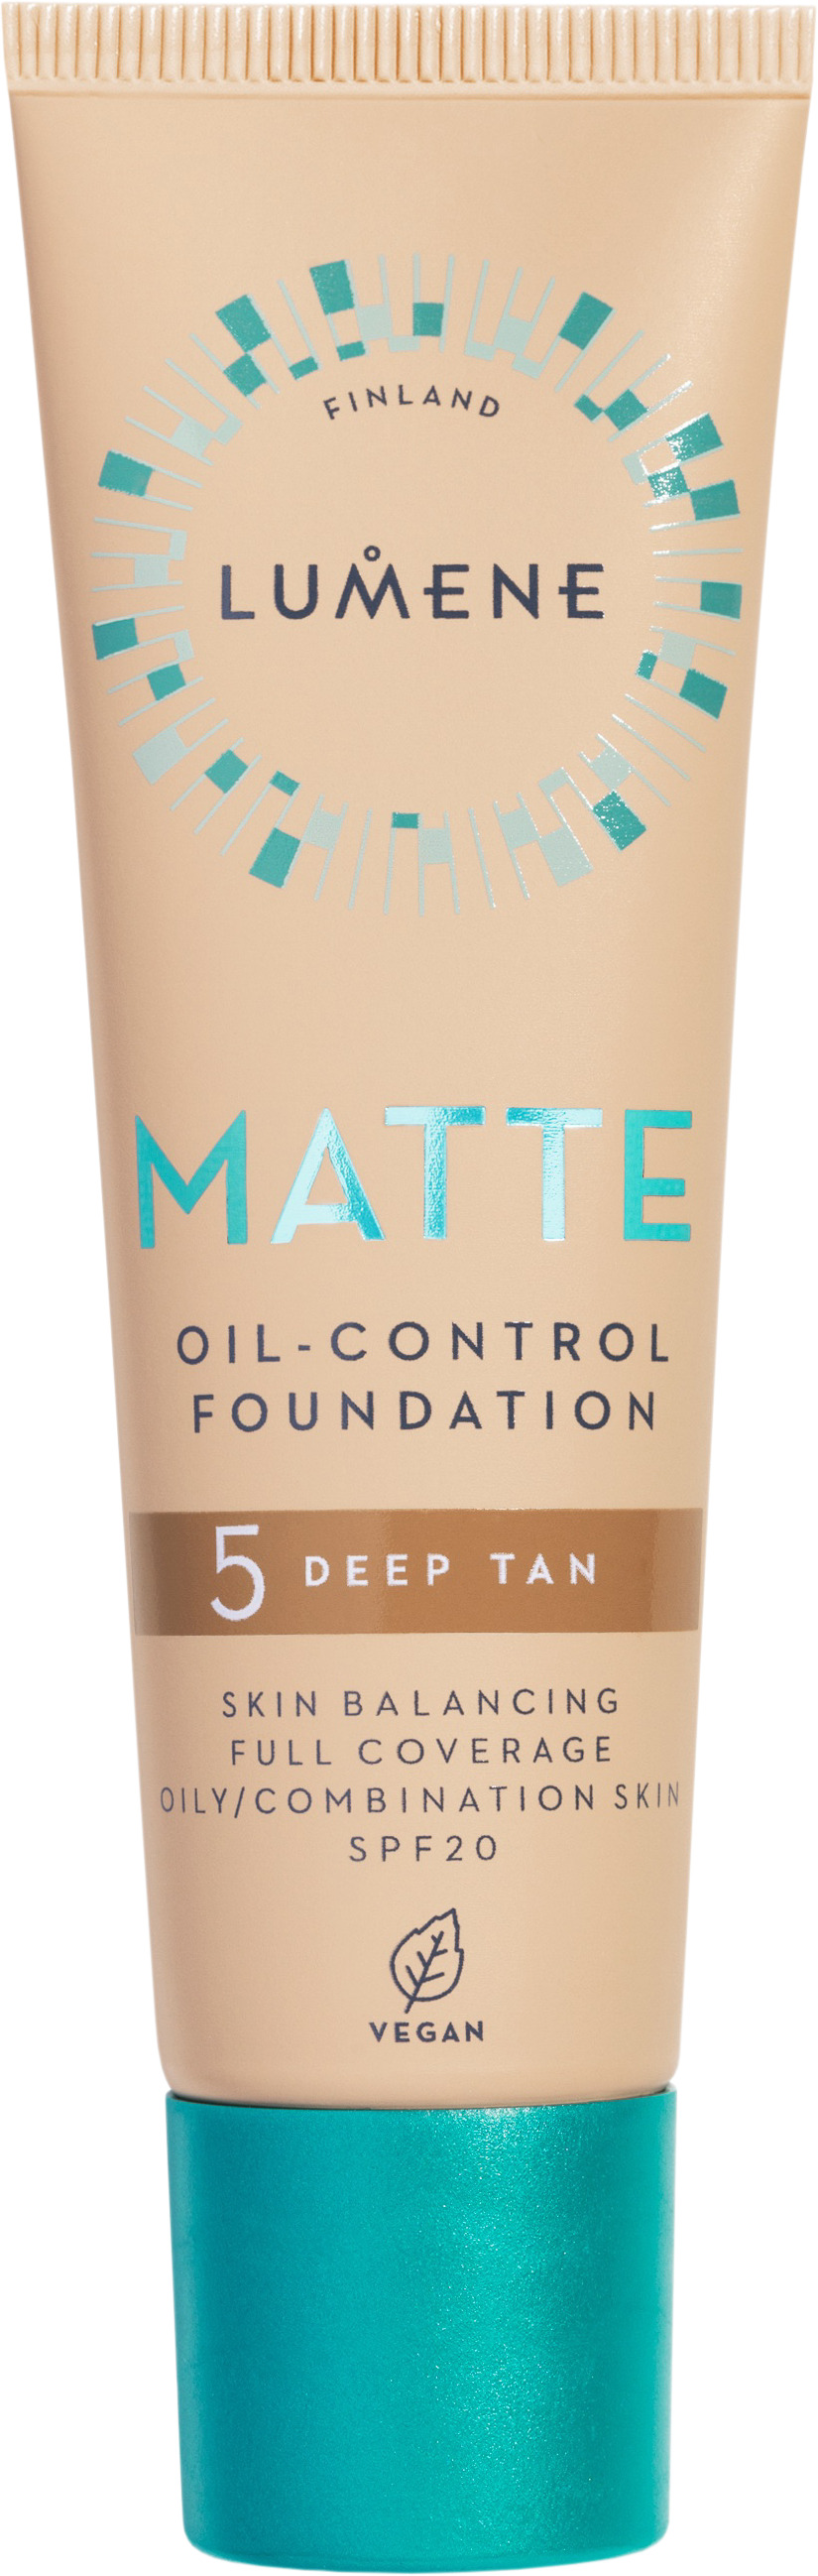 Lumene Matte Oil-Control Foundation SPF20 5 Deep Tan 30 ml